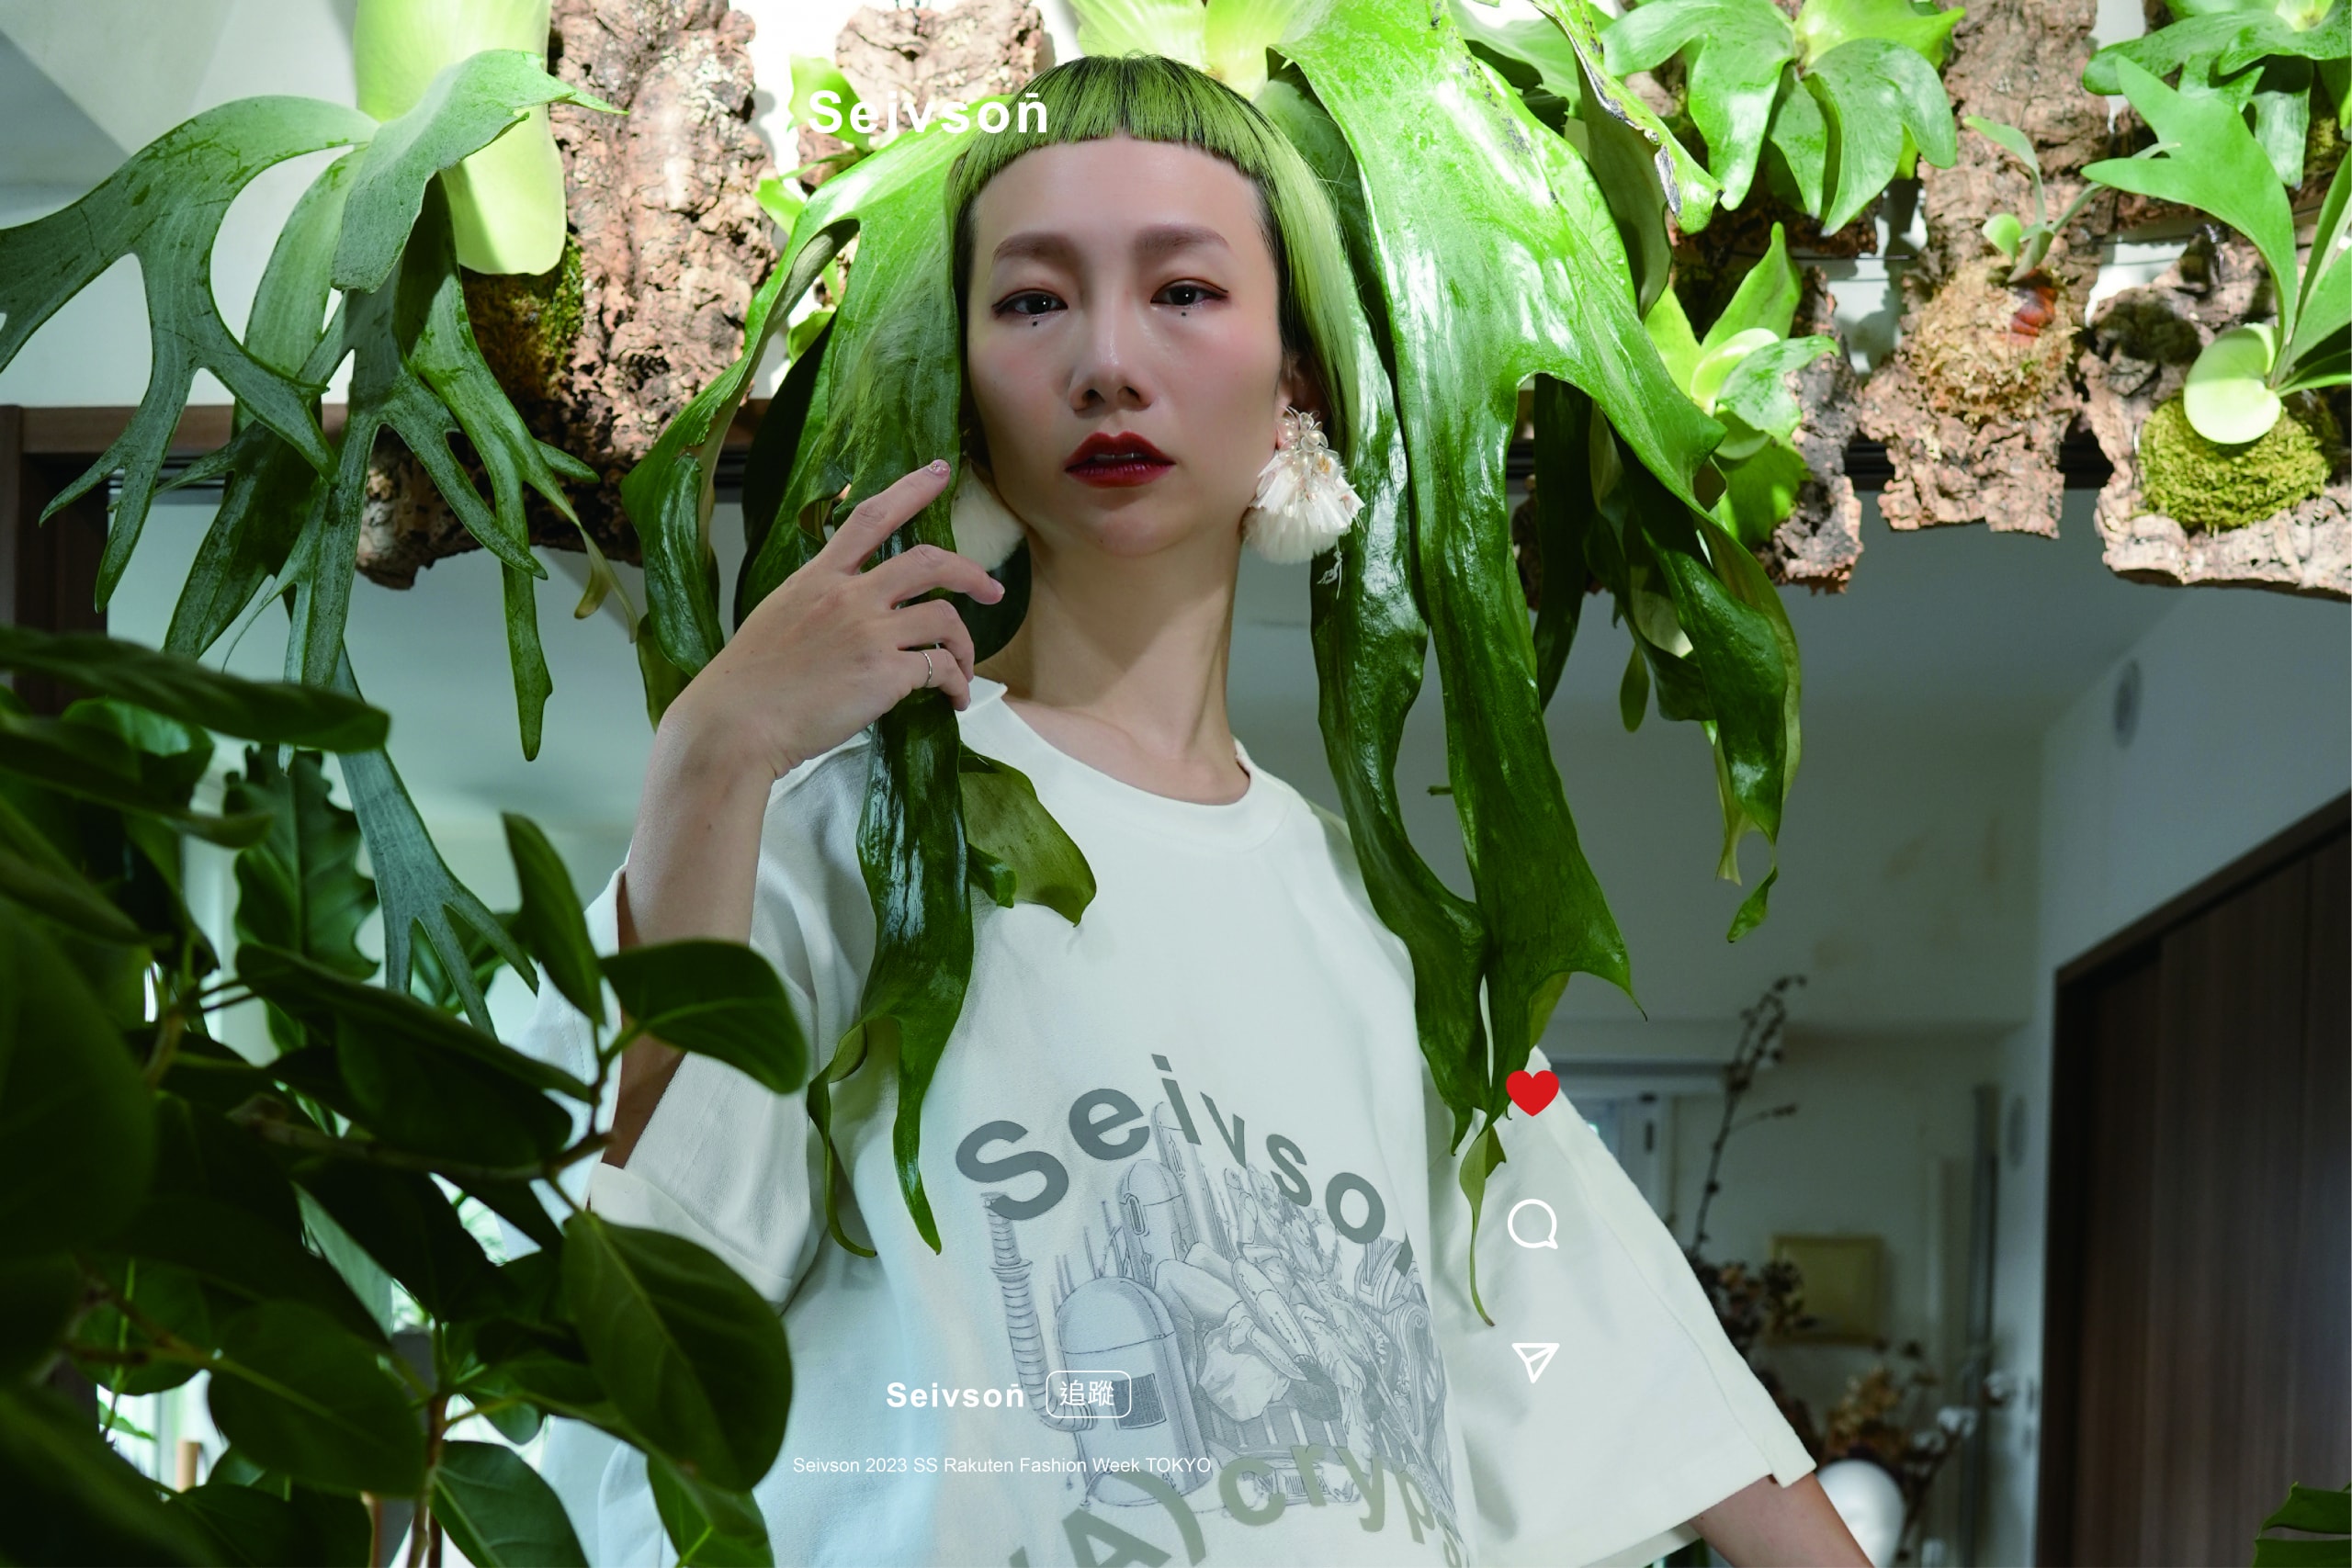 Seivson 2023 春夏系列「We Are All From Taiwan」正式登陸東京時裝週開幕大秀